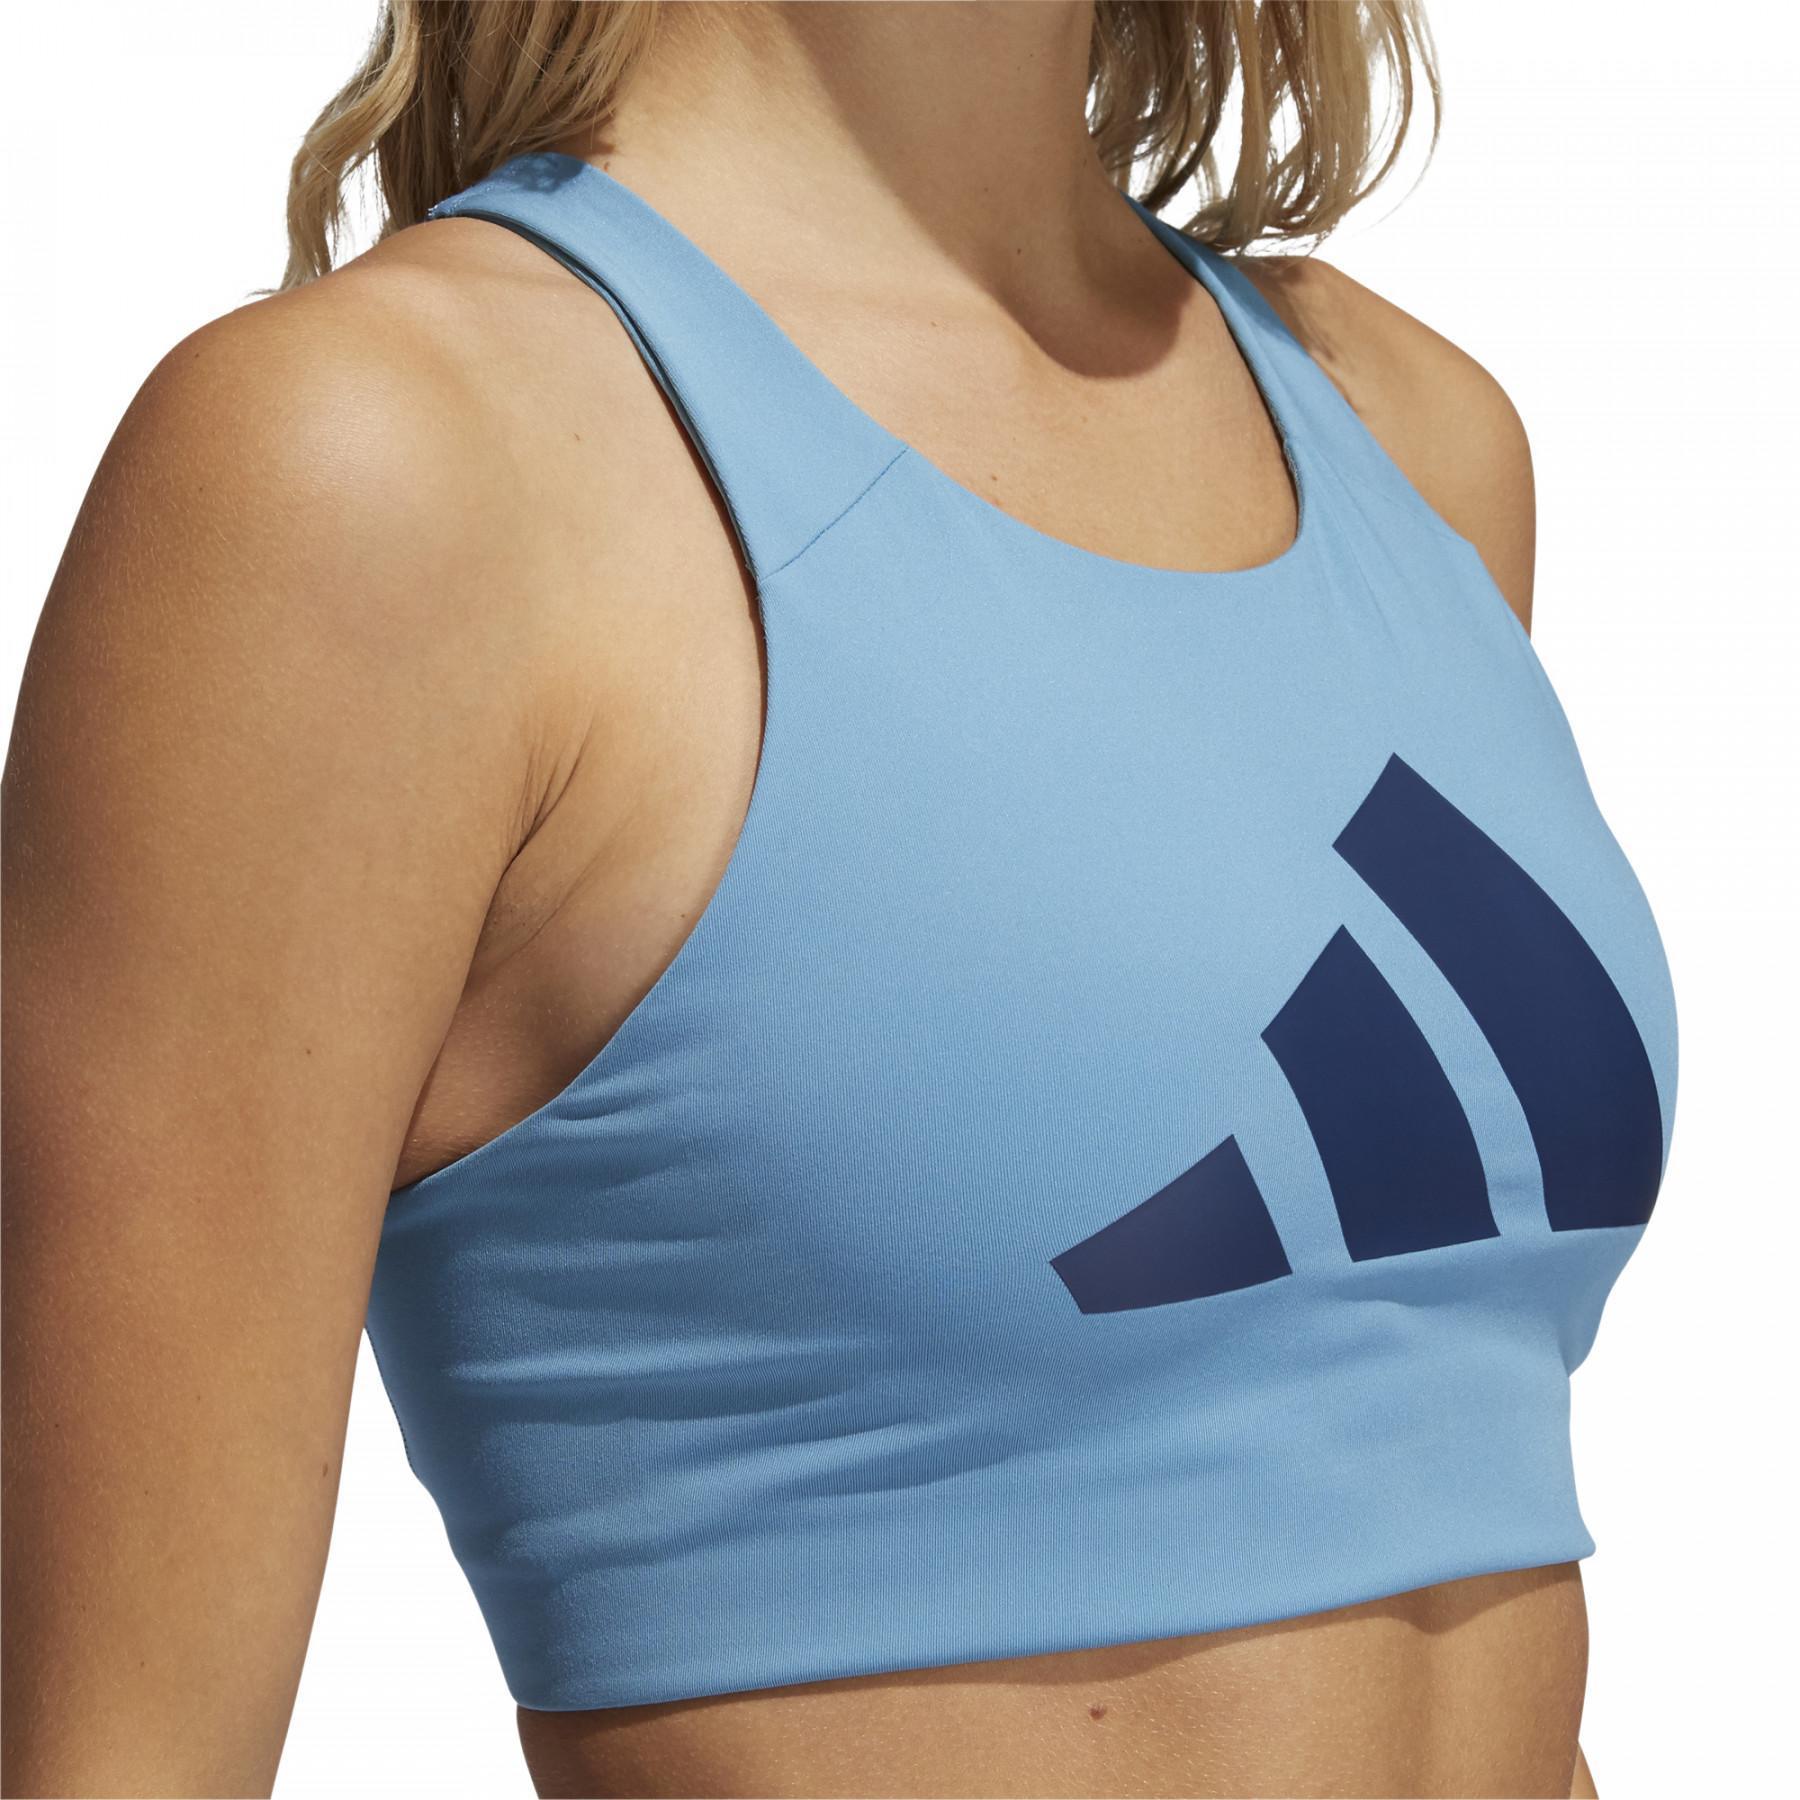 Women's bra adidas Ultimate Alpha adi Life - adidas - Brands - Handball wear